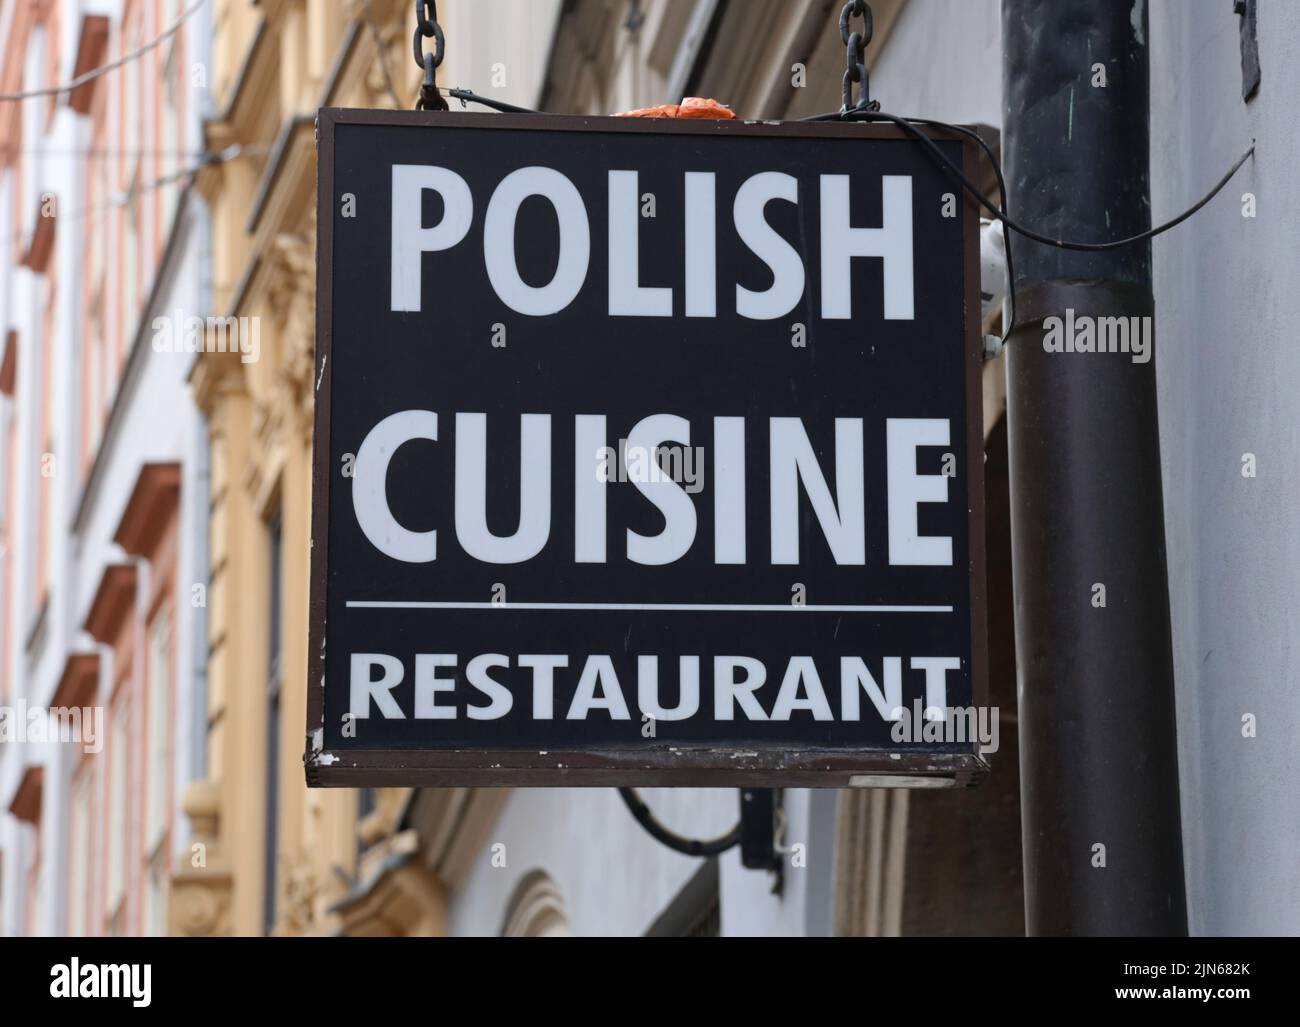 Cracow. Krakow. Poland. Polish cuisine offering restaurant signboard on the facade. Stock Photo